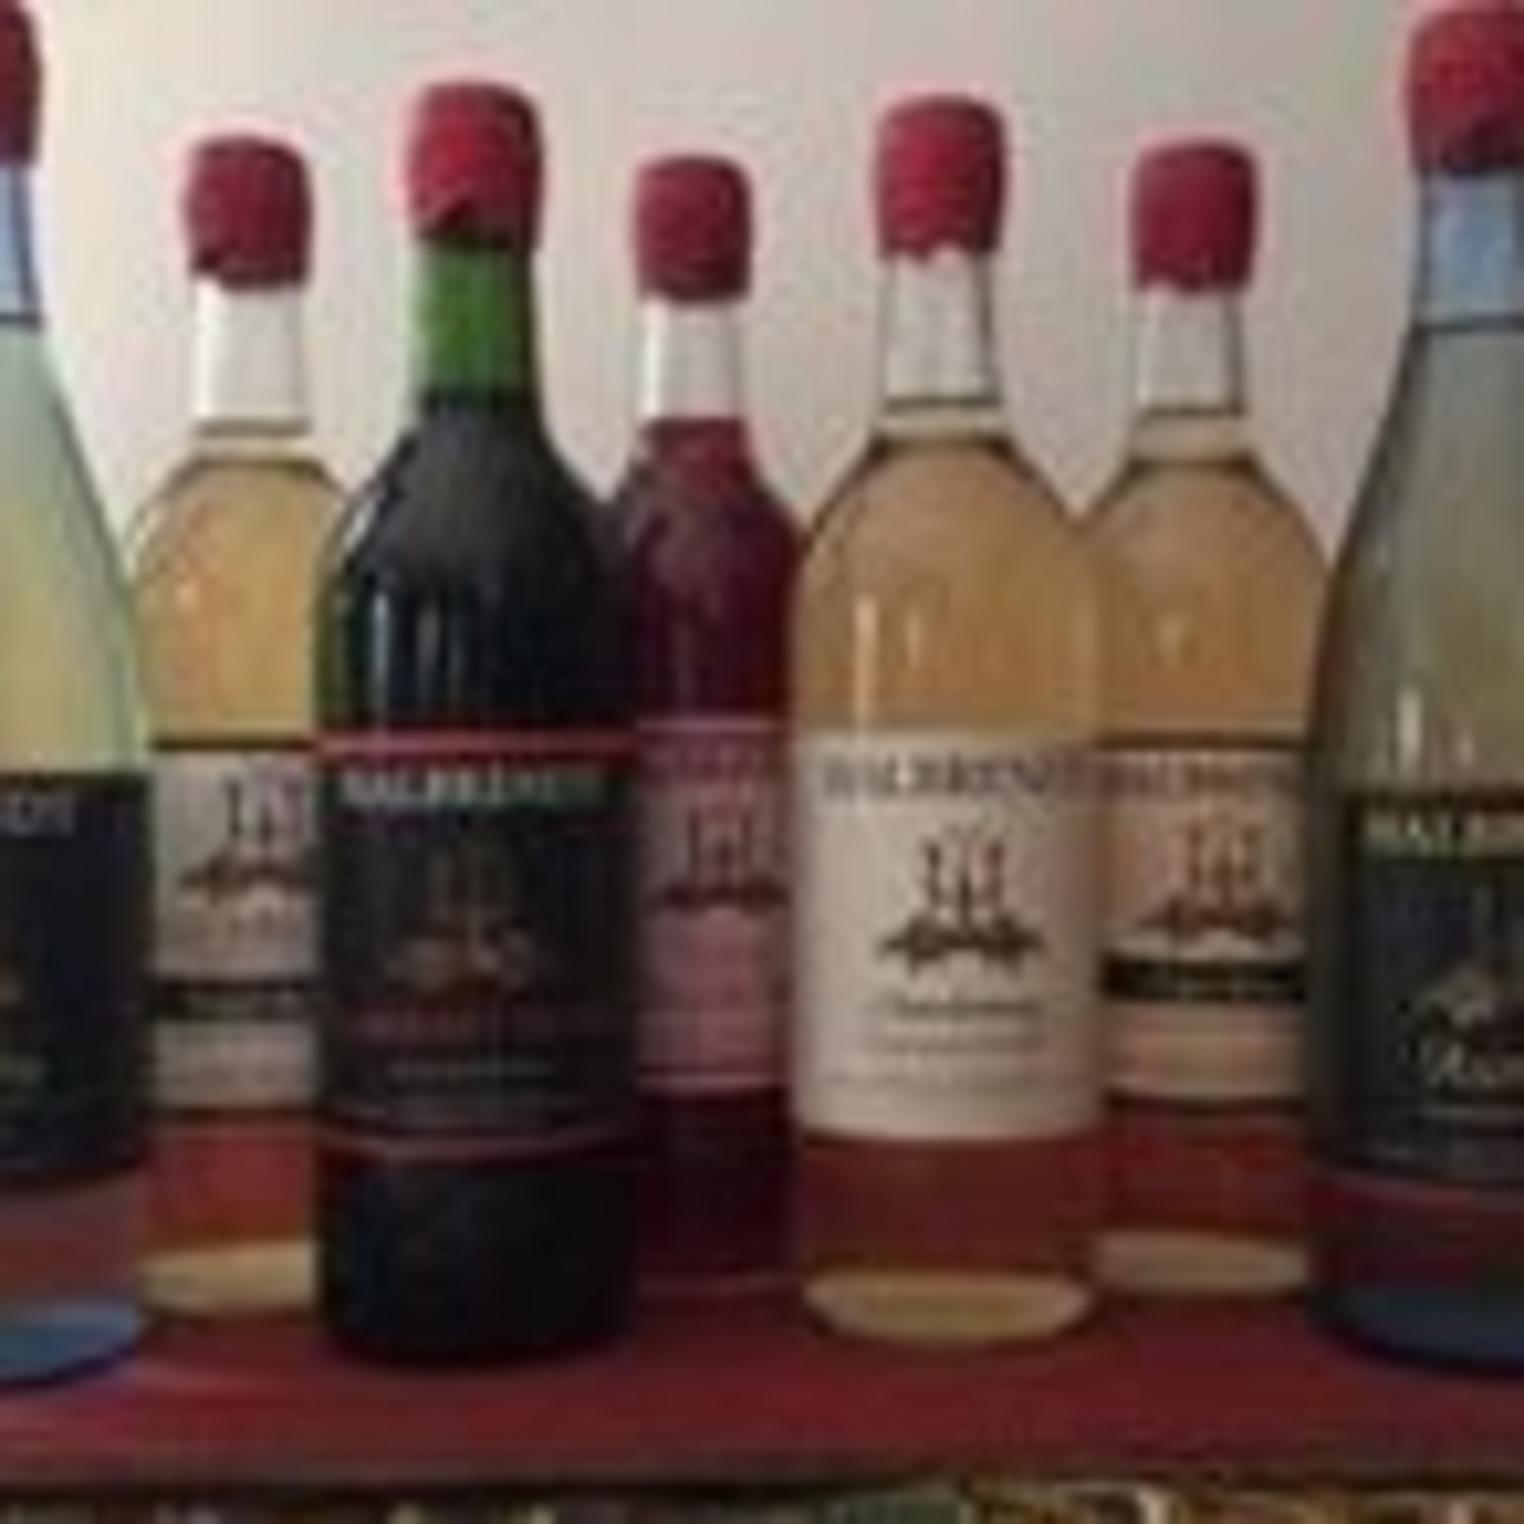 Halbrendt Vineyard & Winery